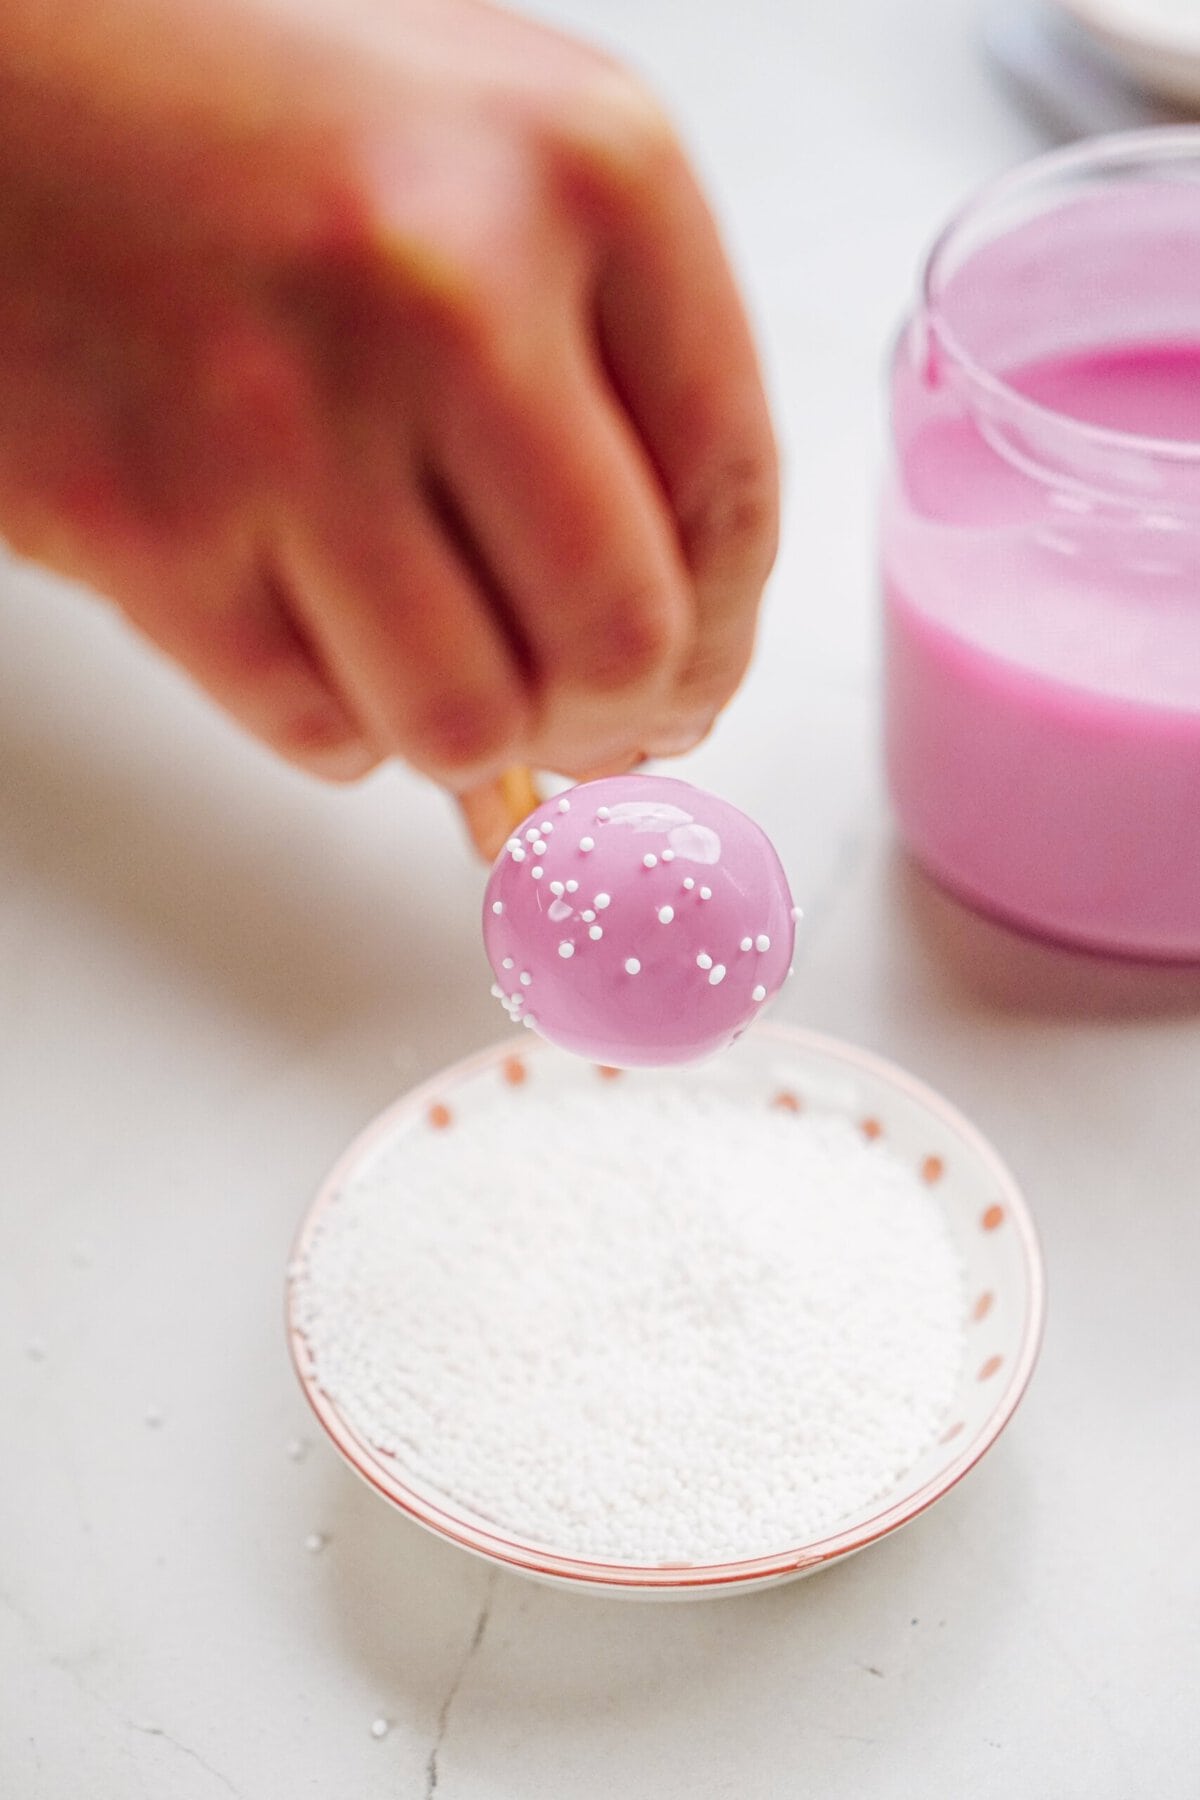 a person adding white sprinkles to a cake pop